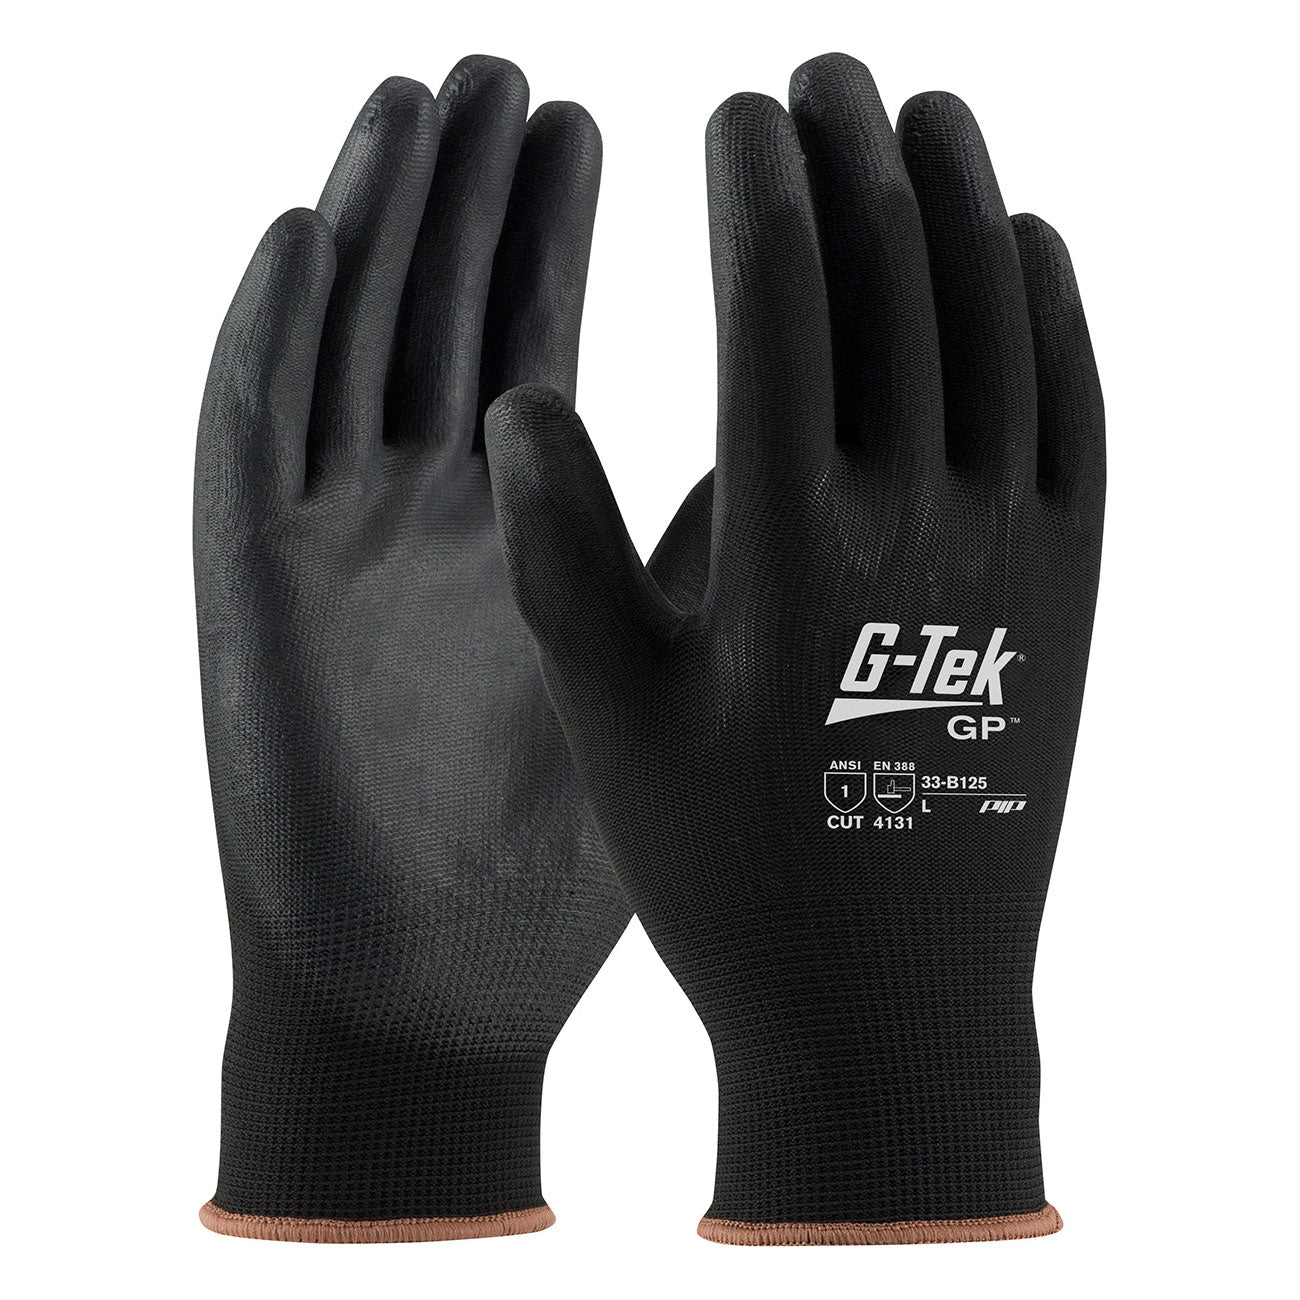 PIP 33-B125 G-Tek GP Seamless Knit Nylon Gloves - Polyurethane Coated Smooth Grip (12 Pairs)-eSafety Supplies, Inc